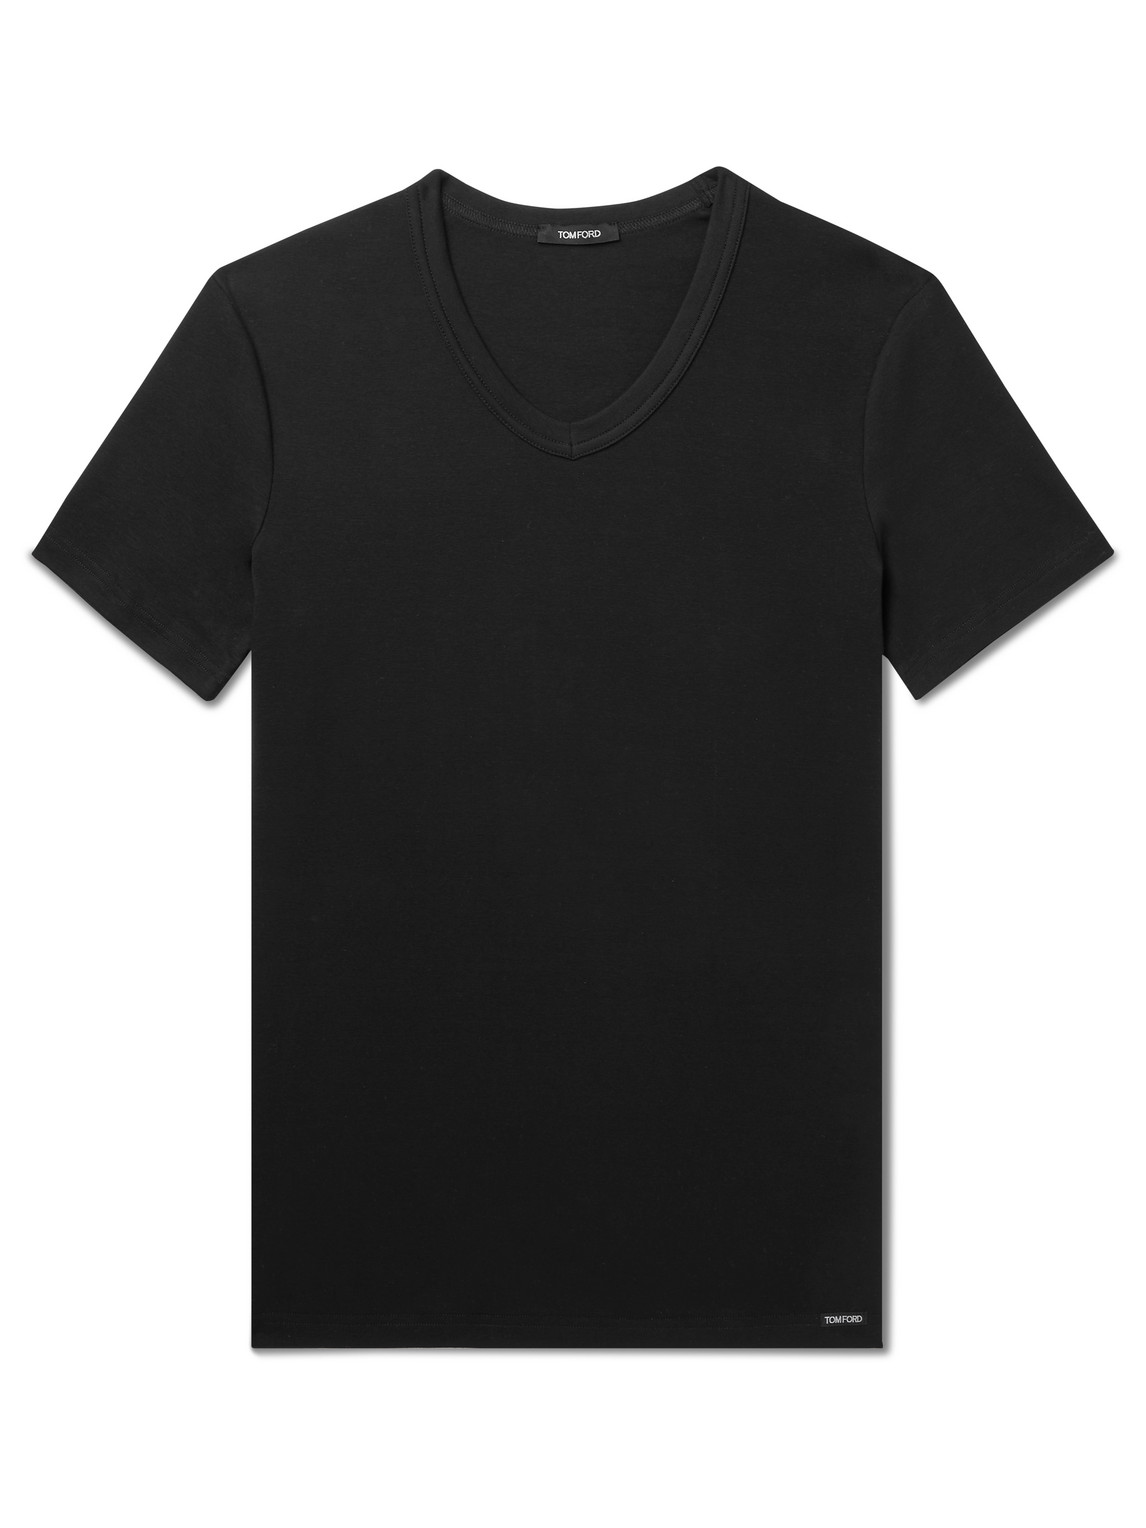 Tom Ford Slim-fit Stretch-cotton Jersey T-shirt In Grey Melange